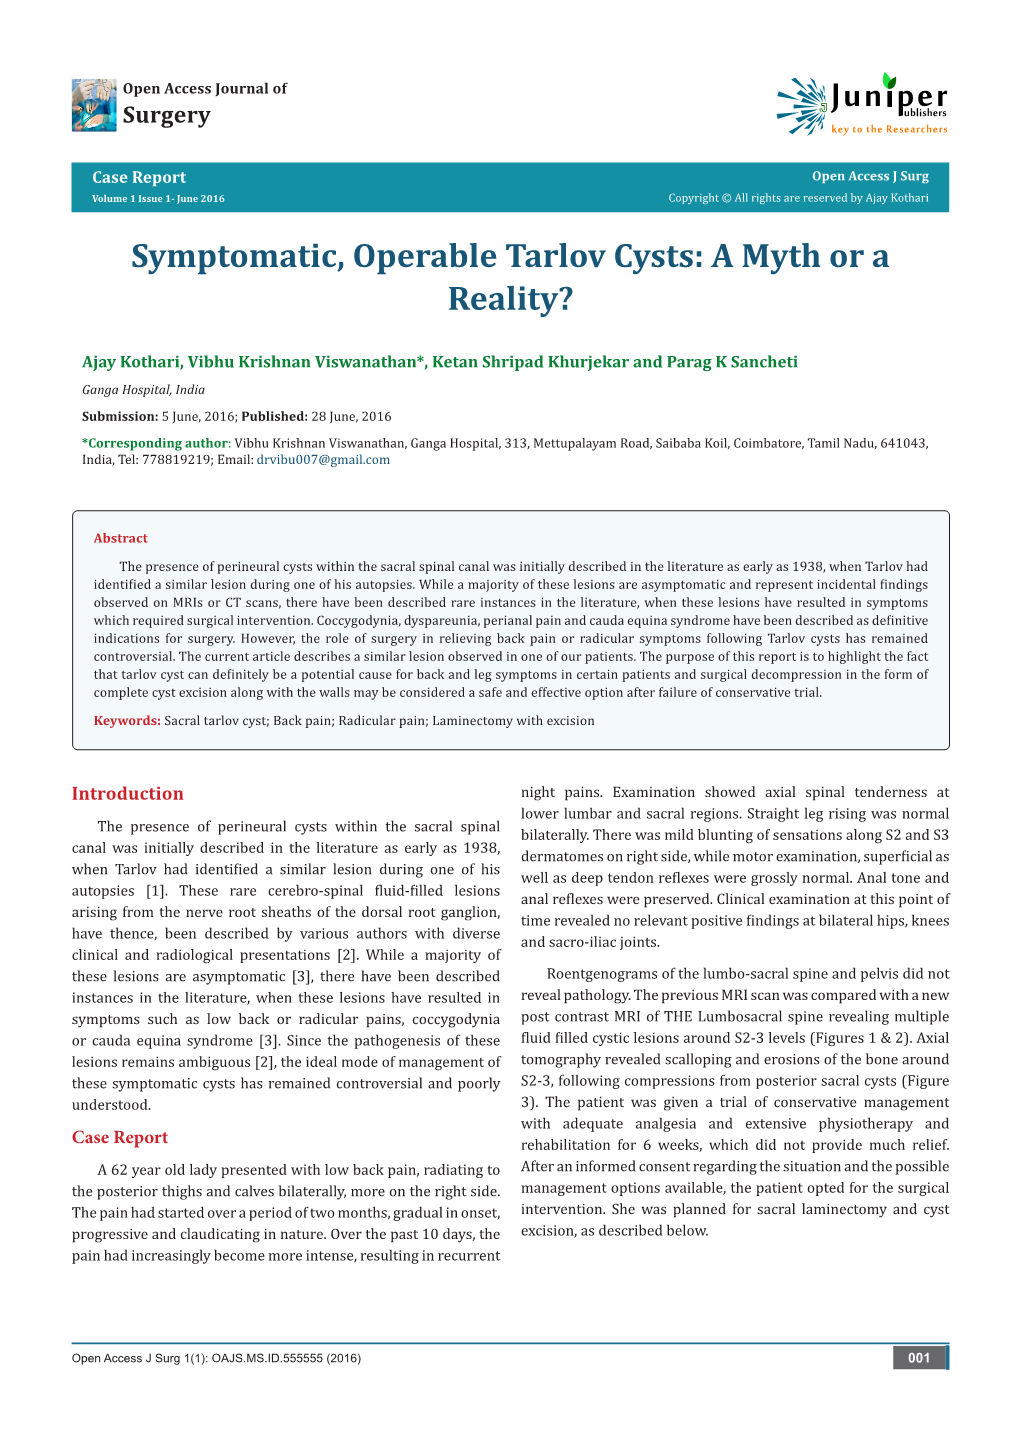 Symptomatic, Operable Tarlov Cysts: a Myth Or a Reality?